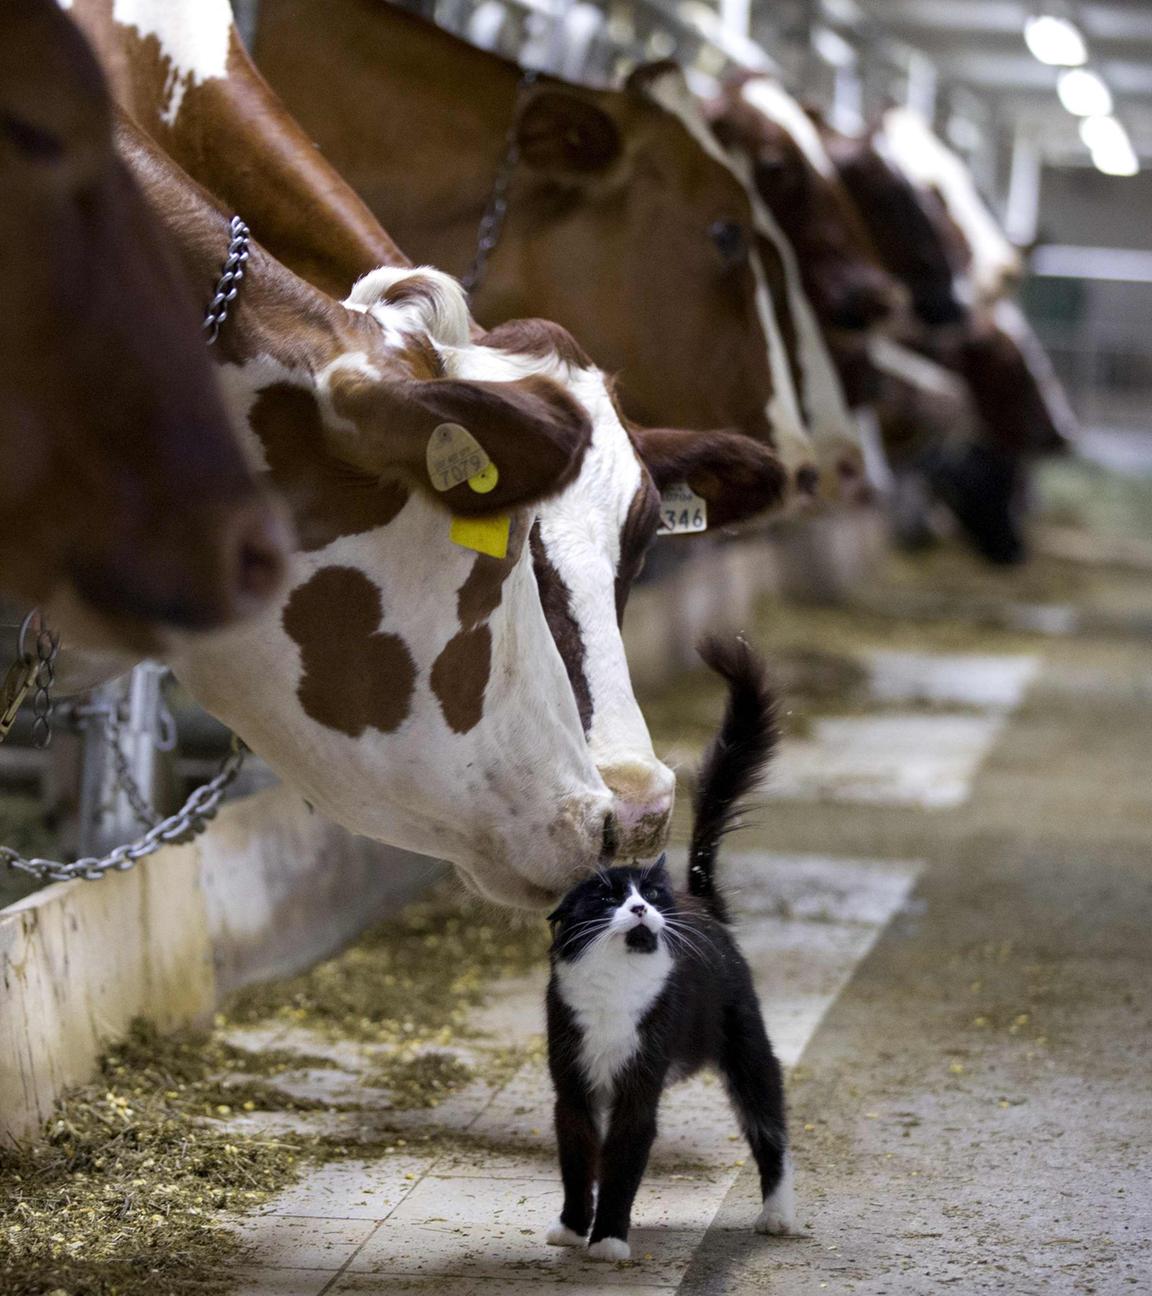 Archiv: Kühe im Kuhstall schnüffeln an Katze